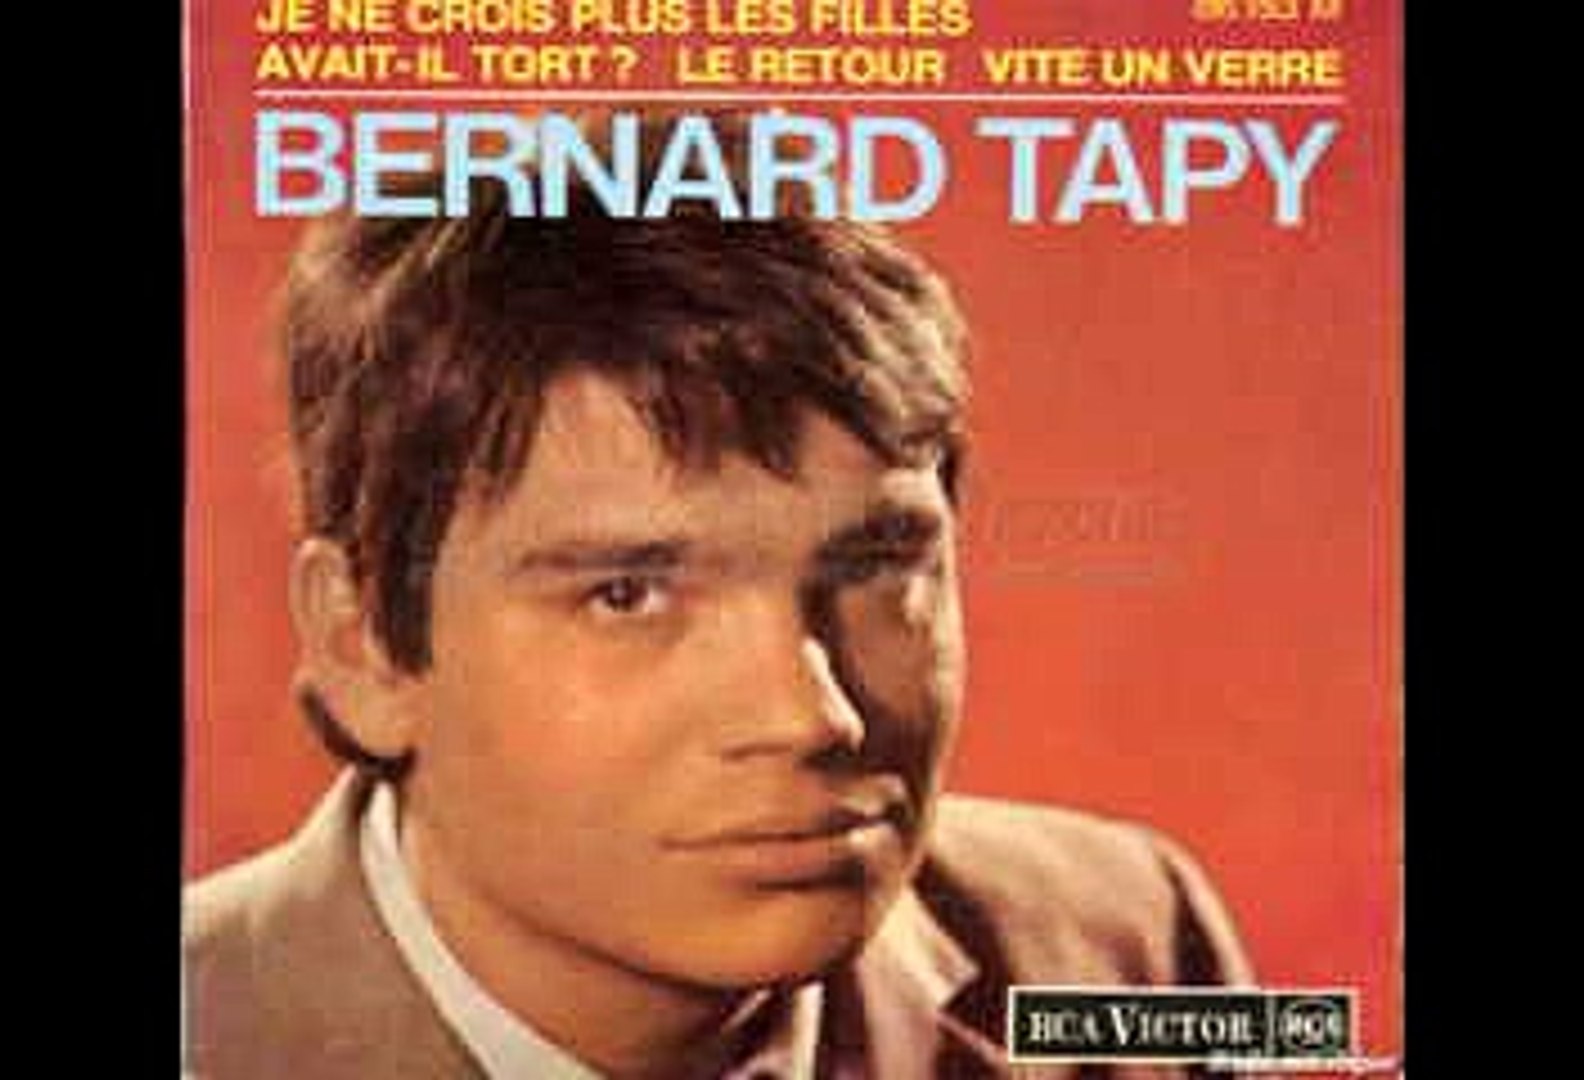 Bernard Tapy - Vite un verre - Vidéo Dailymotion